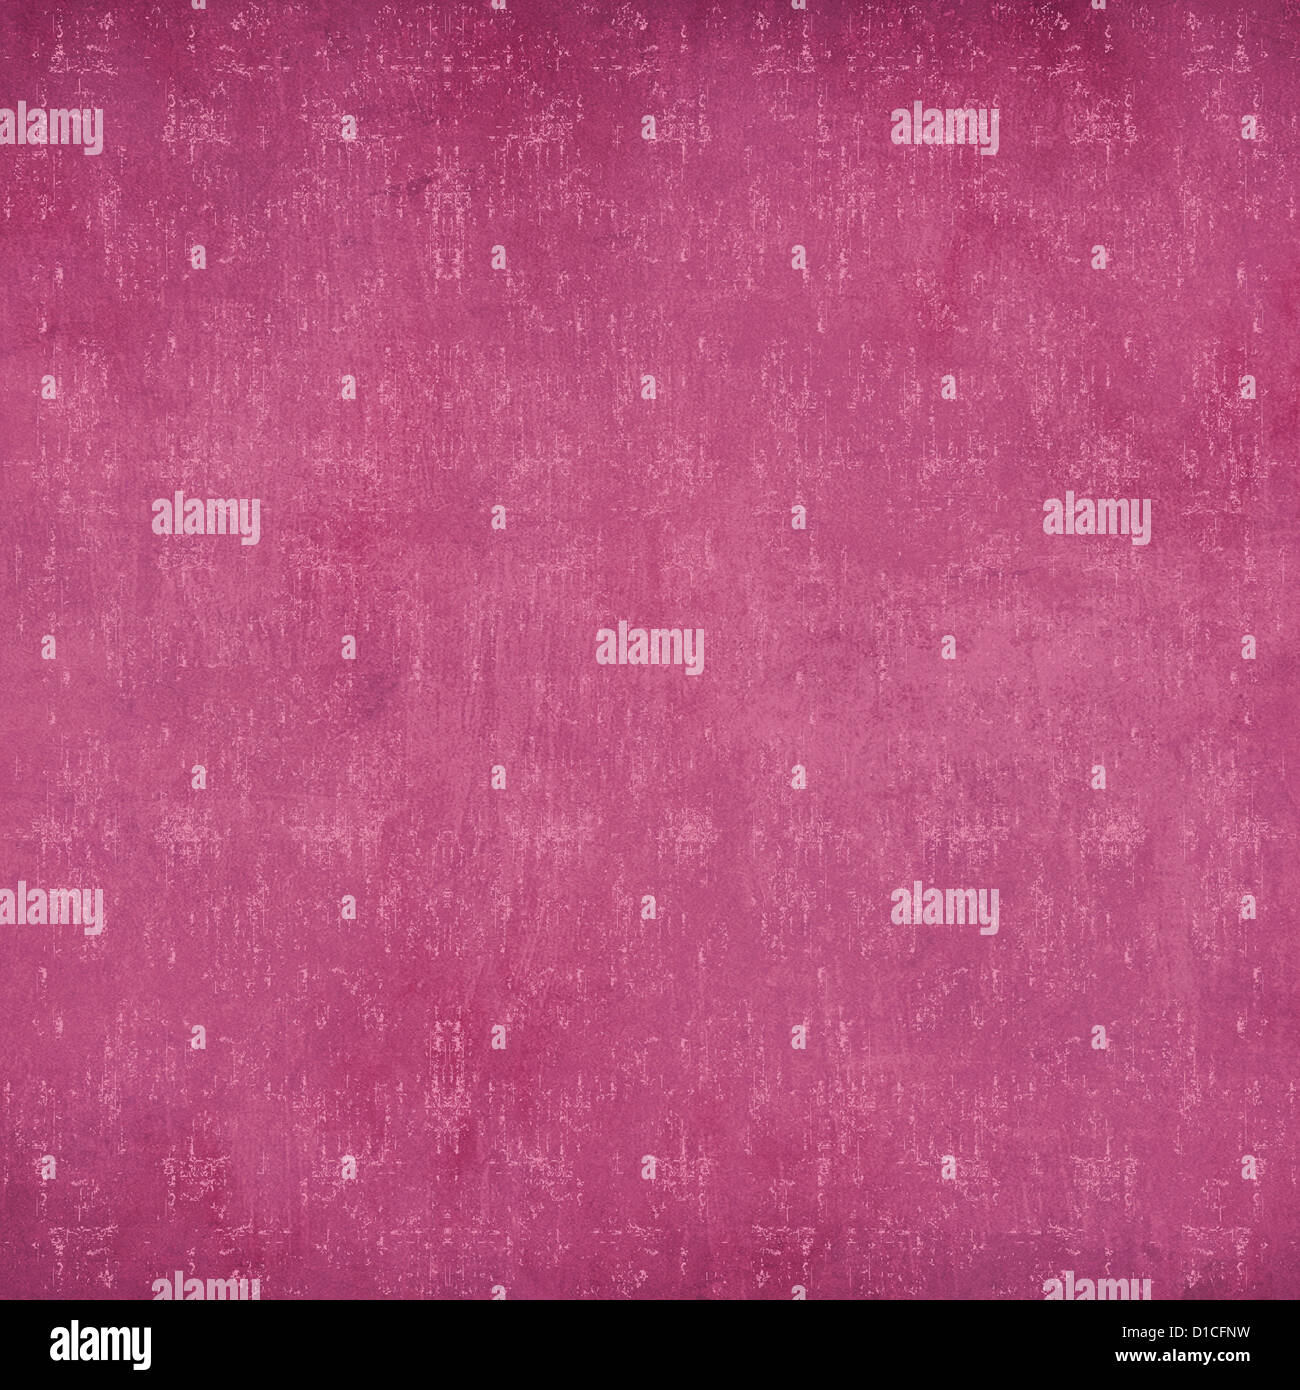 Retro grunge background texture papier magenta. Banque D'Images